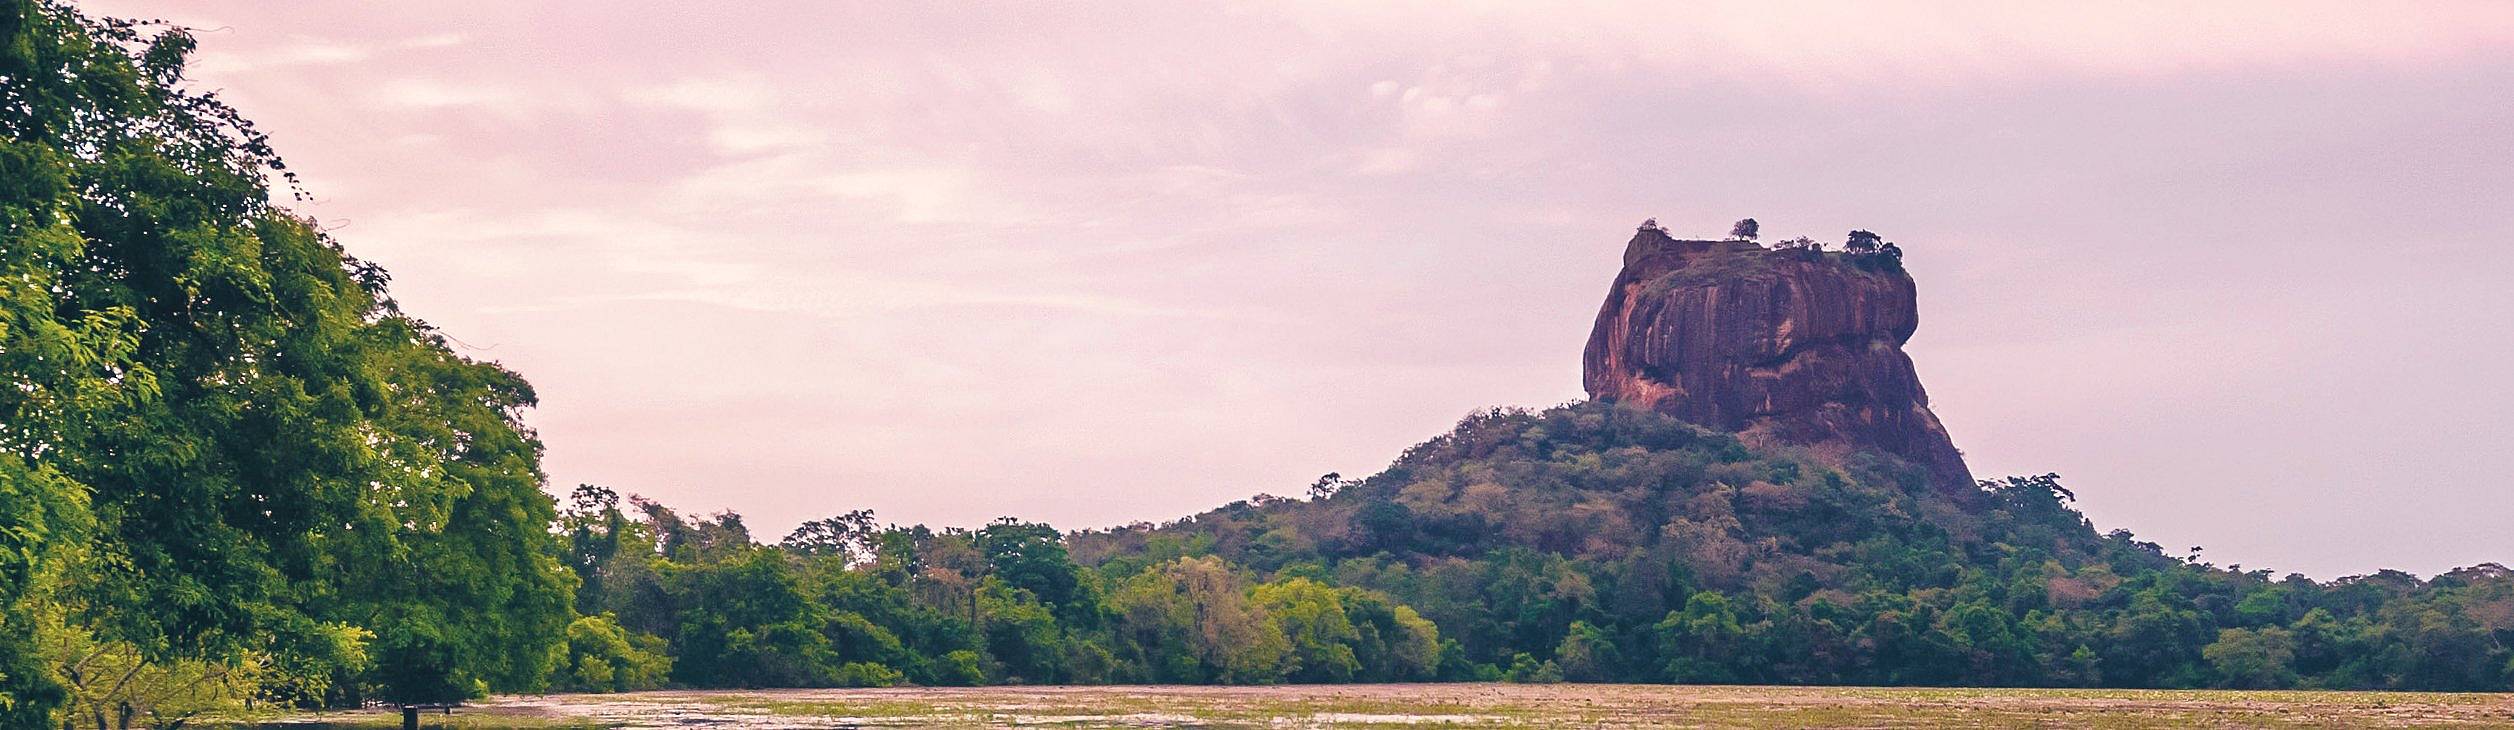 Festung von Sigiriya